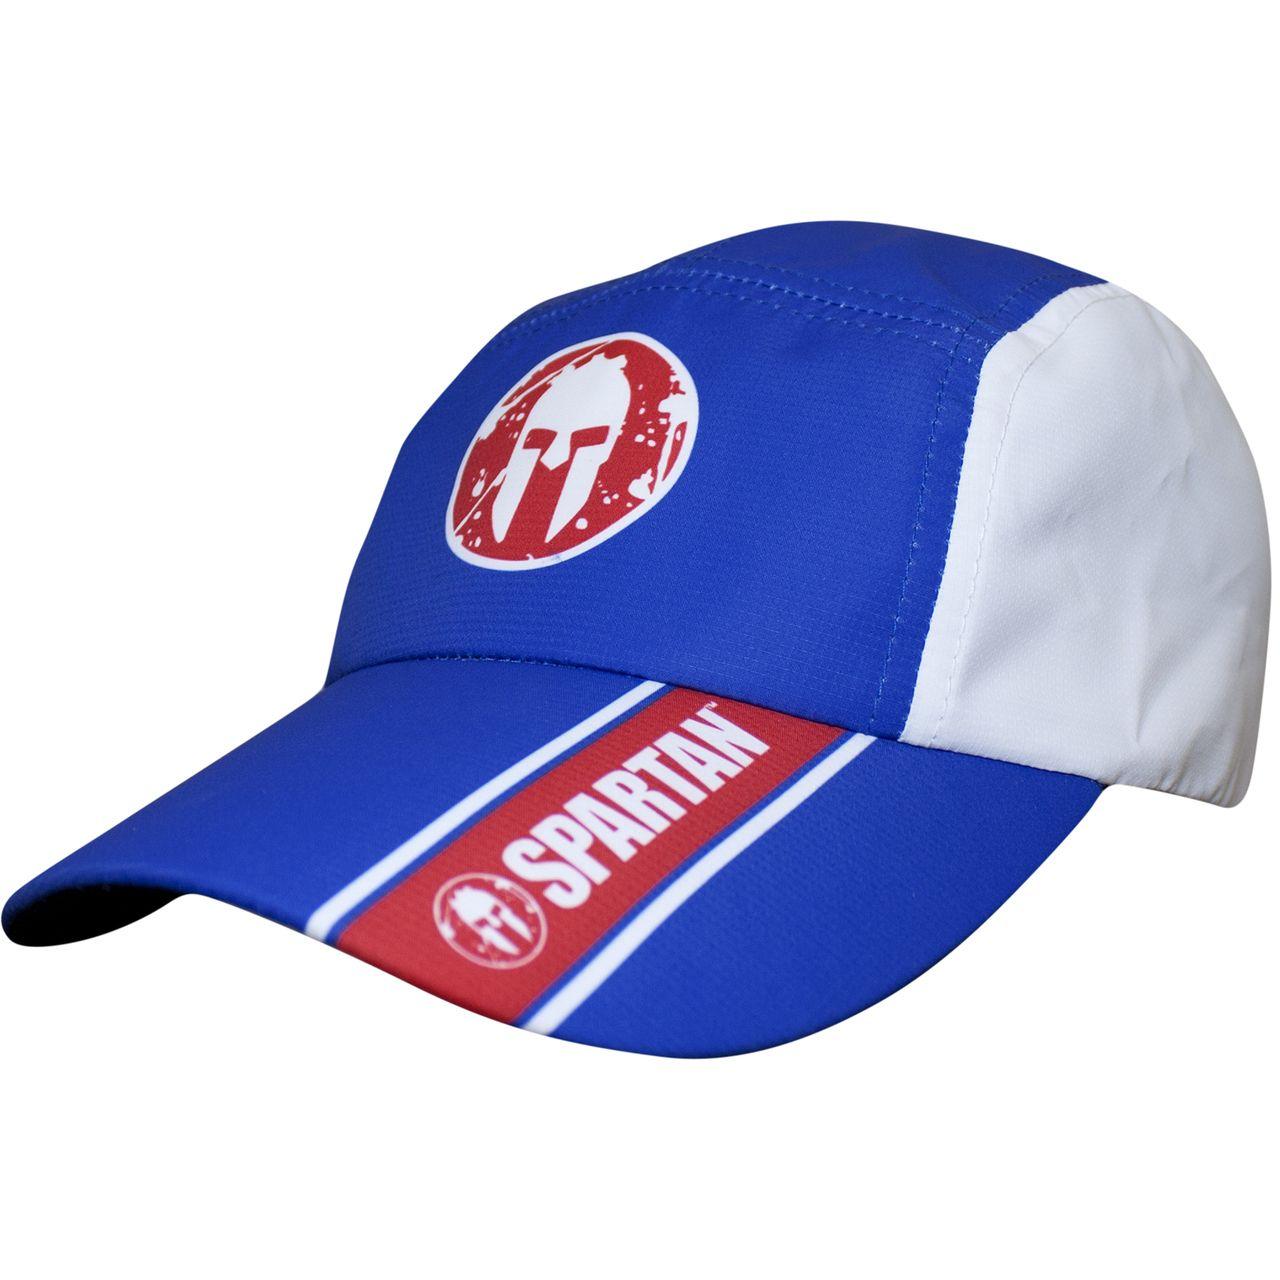 Red White Race Logo - Spartan Race Hat. Spartan Running Hat. Performance Headwear at